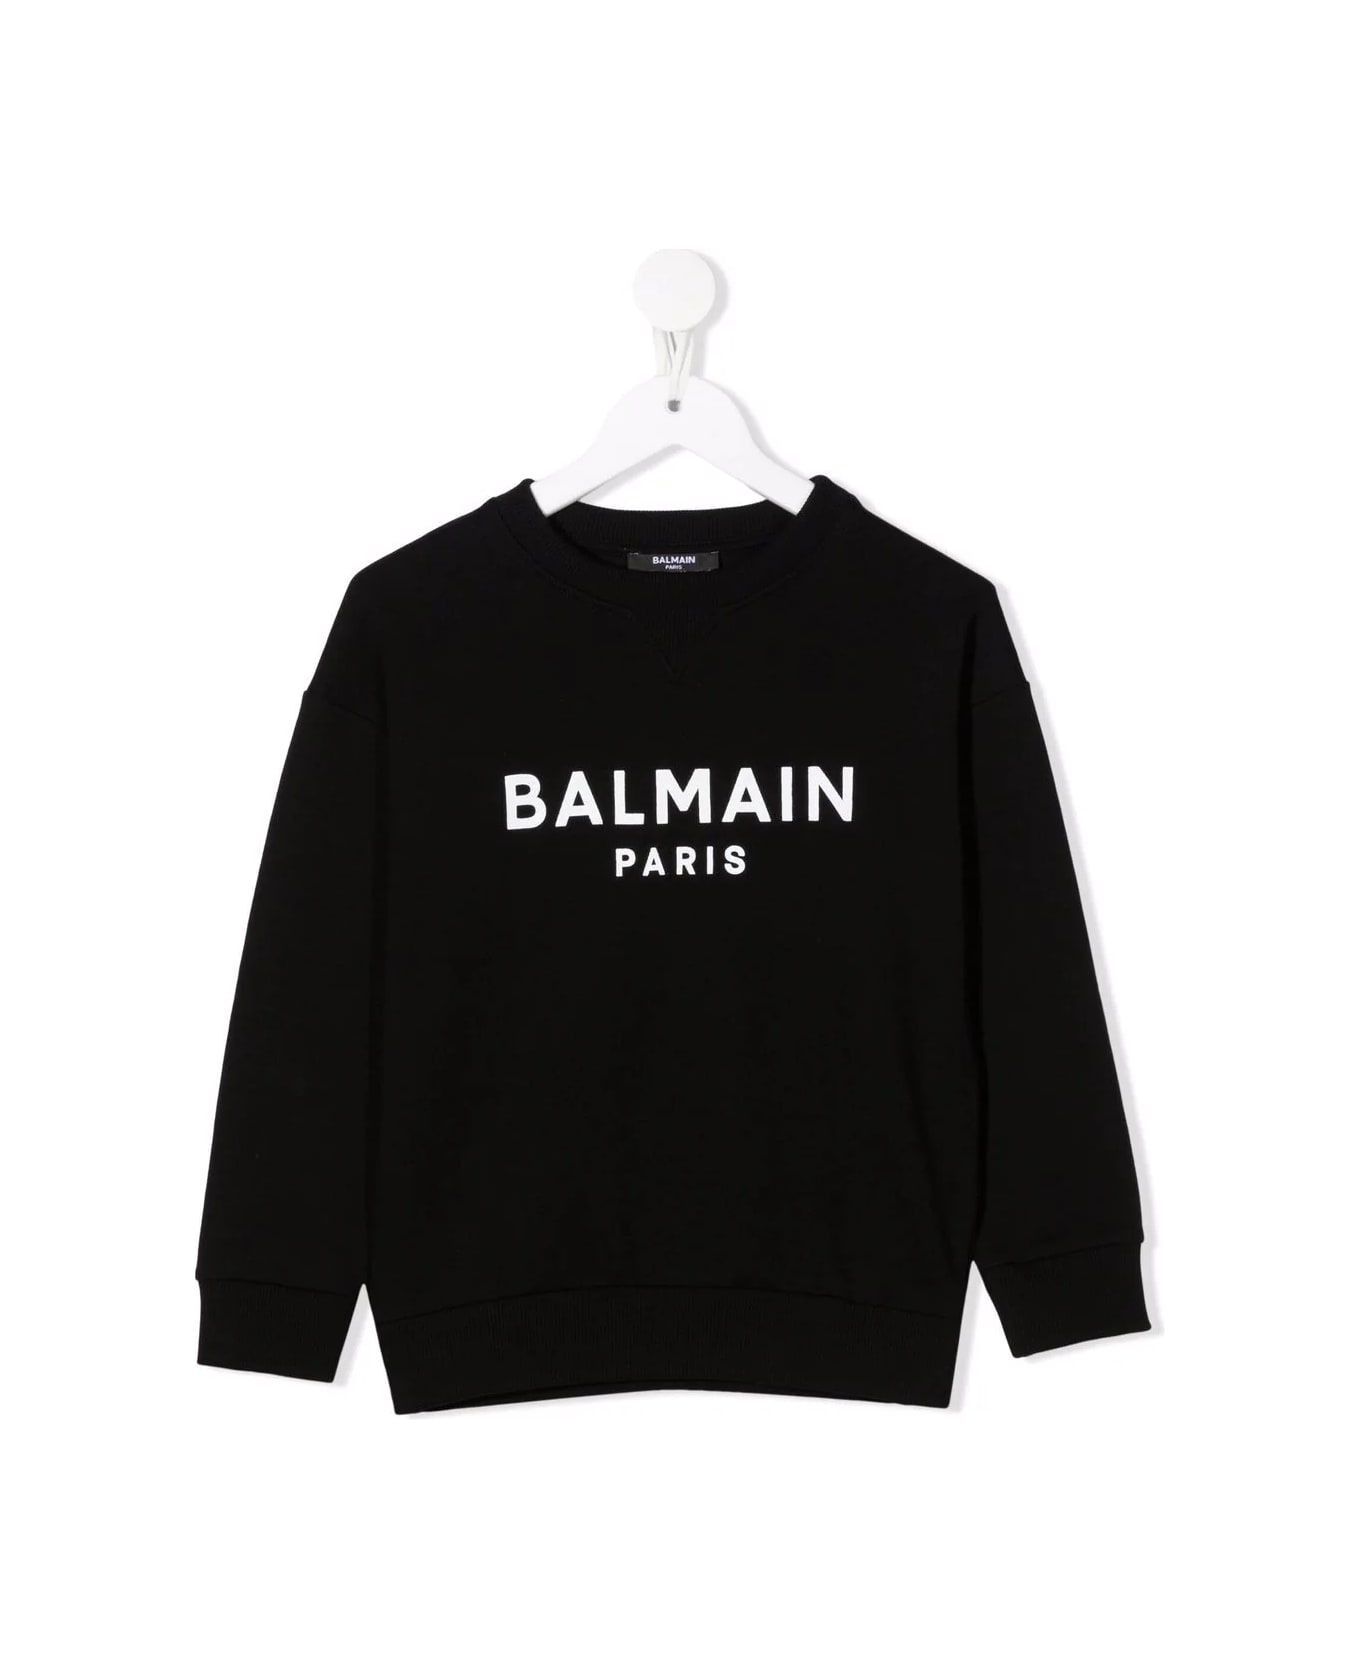 Balmain Kids Black Sweatshirt With White Logo - Black